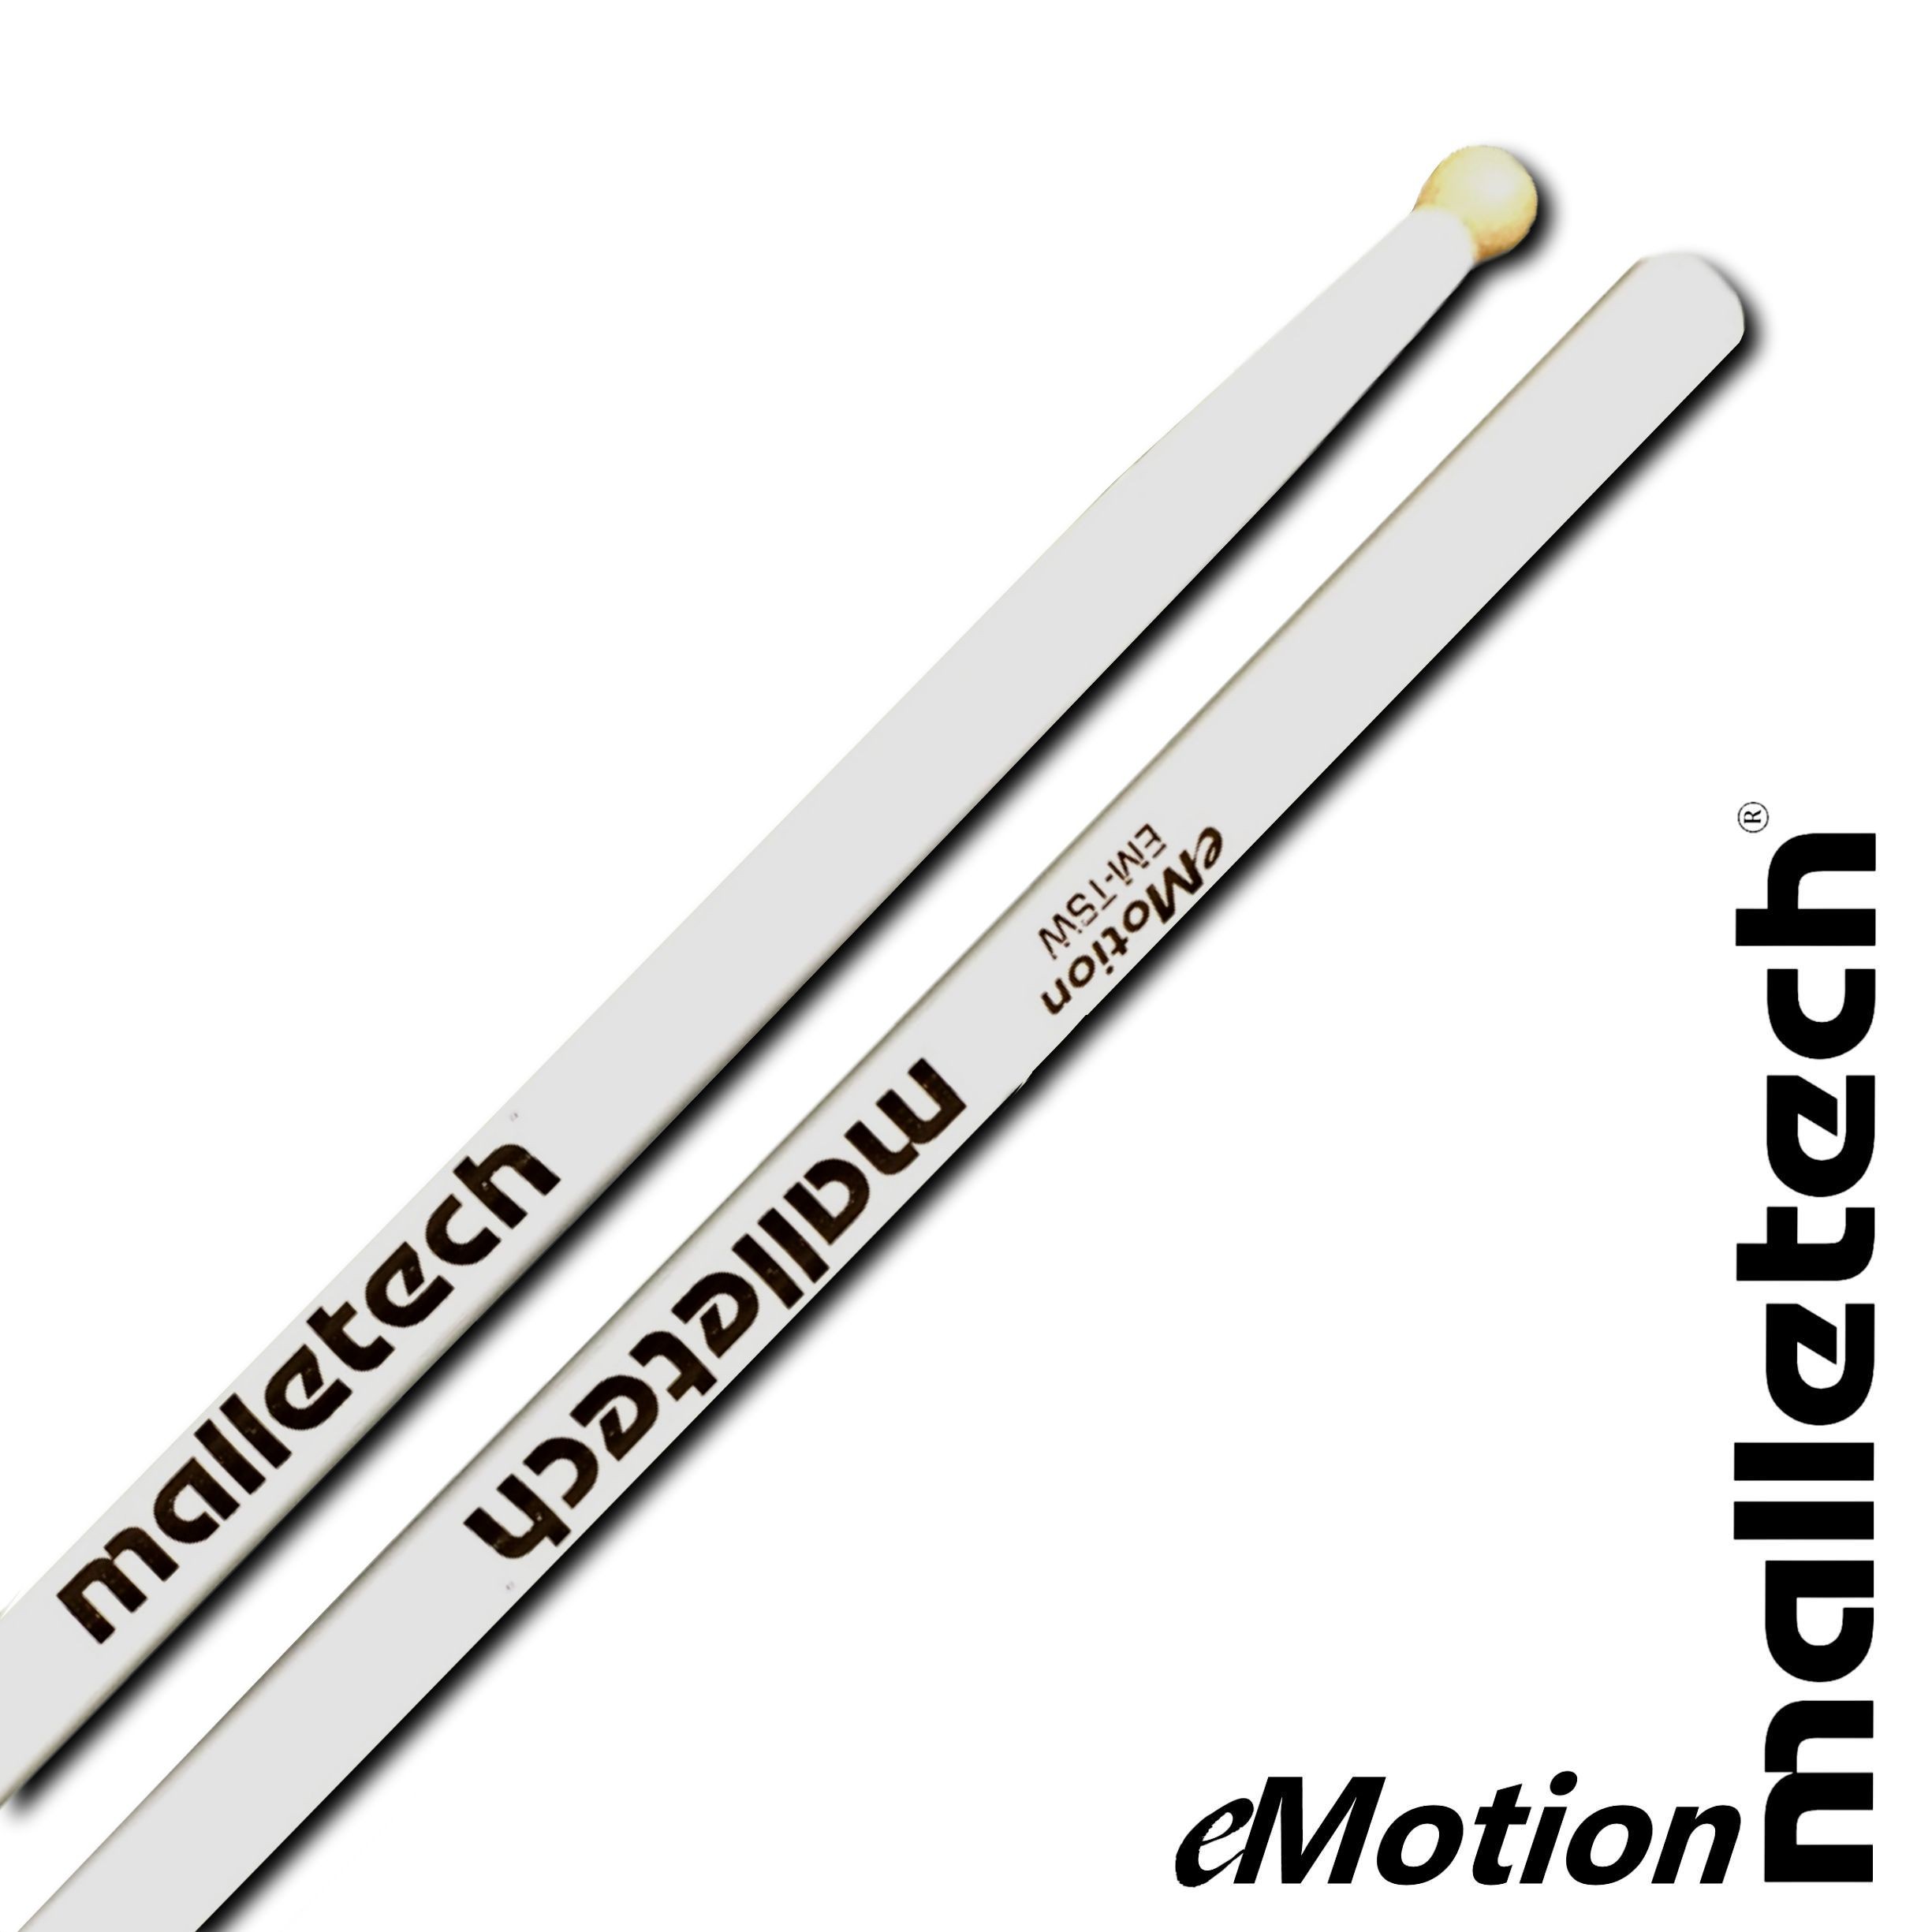 Malletech EM-TSW eMotion Wood Tenor Sticks